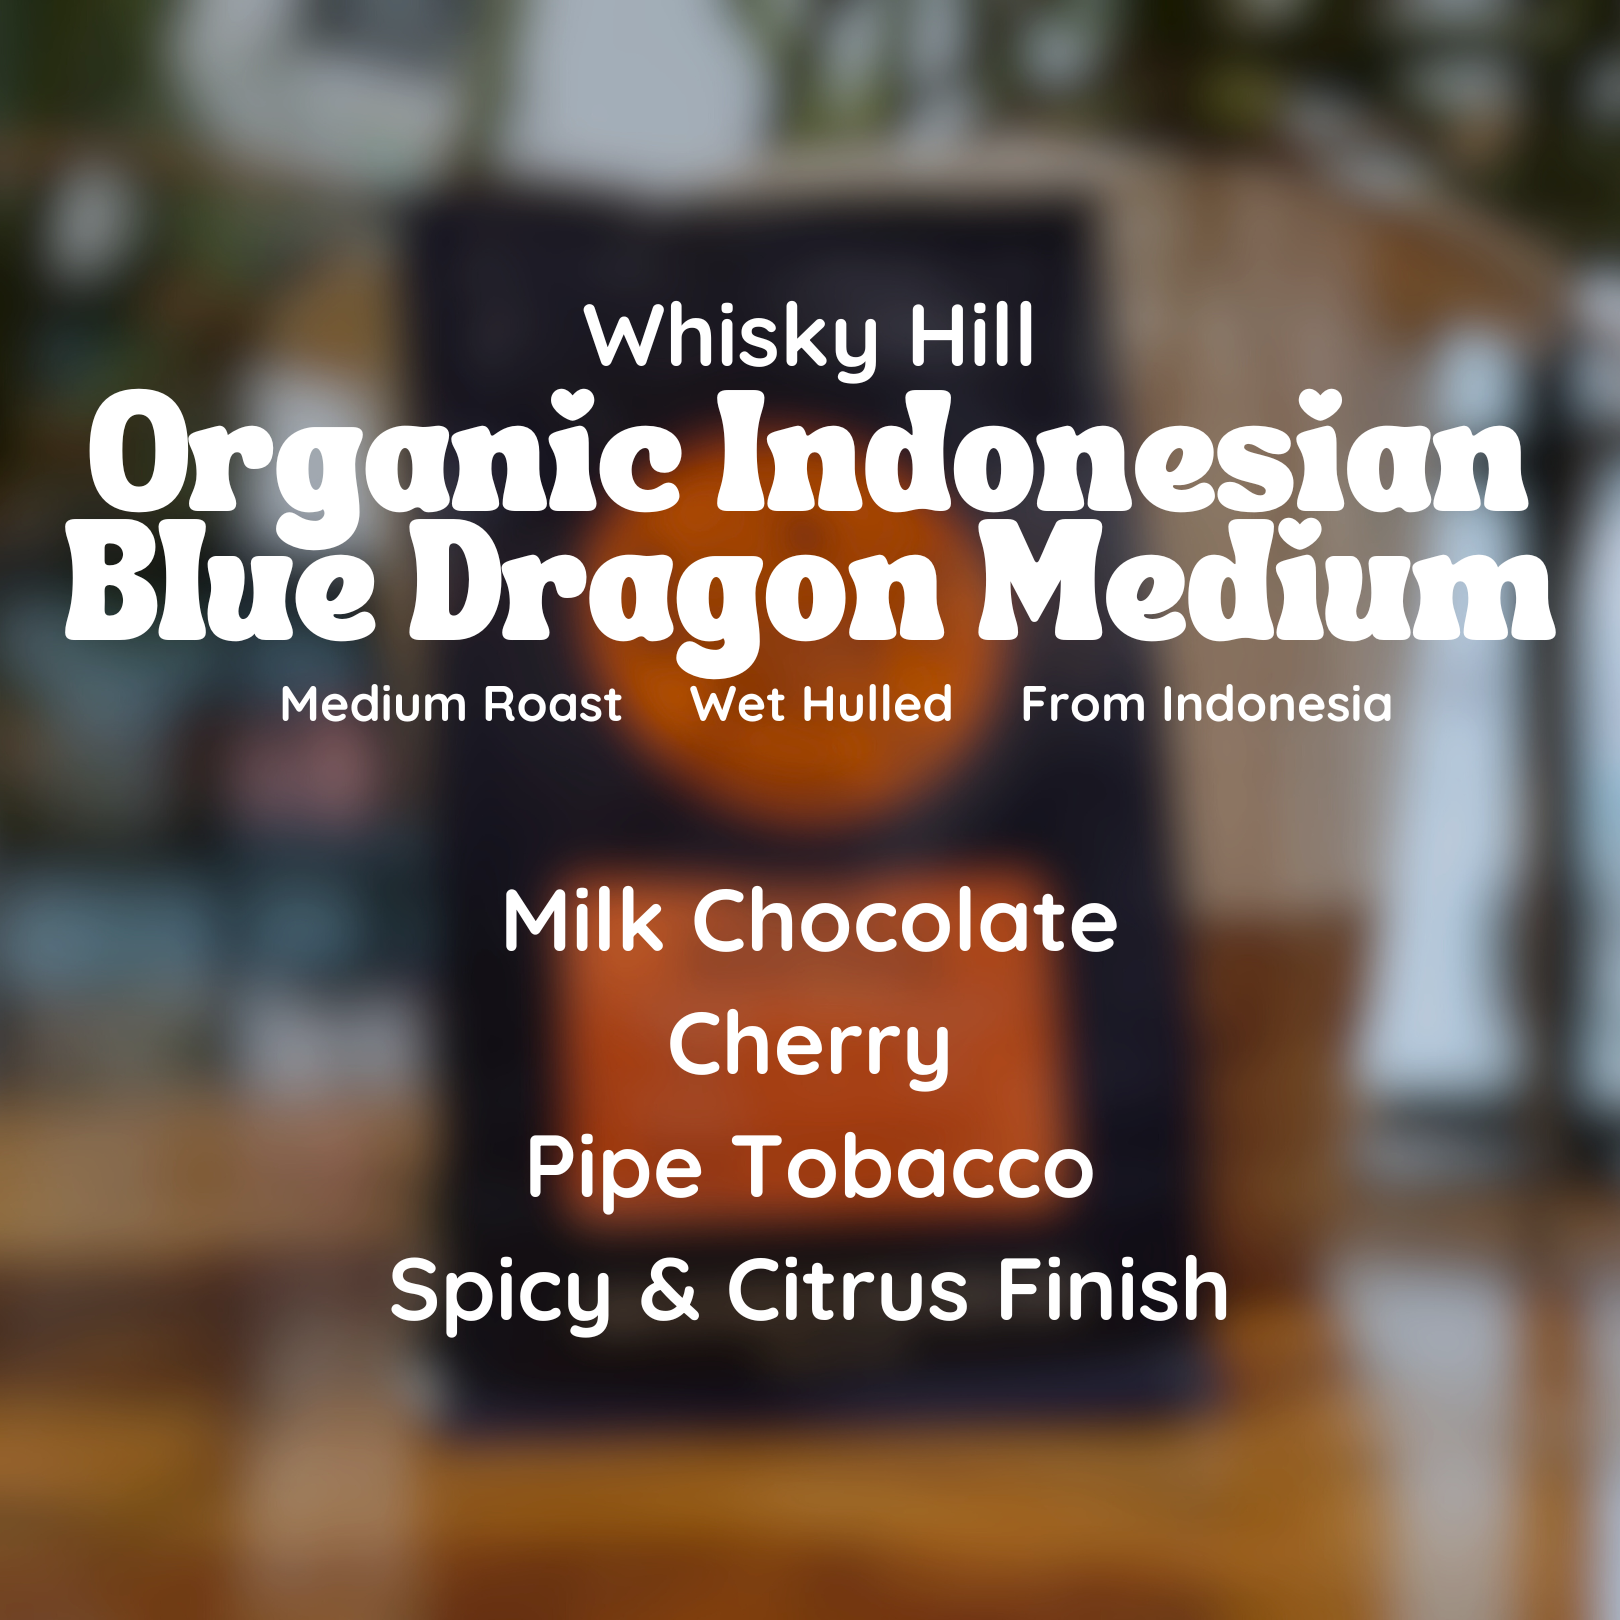 Whisky Hill Organic Indonesian Blue Dragon Medium